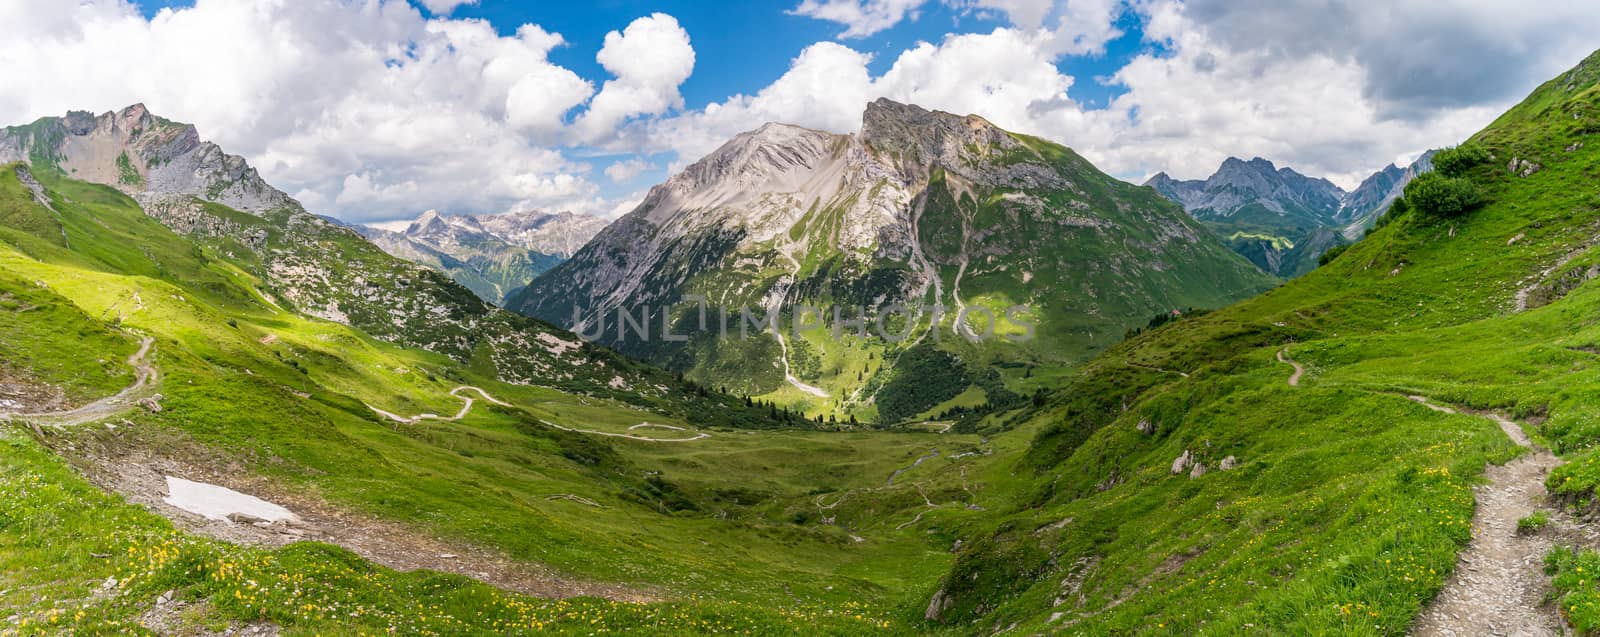 Fantastic hike in the Lechquellen Mountains in Vorarlberg Austria by mindscapephotos